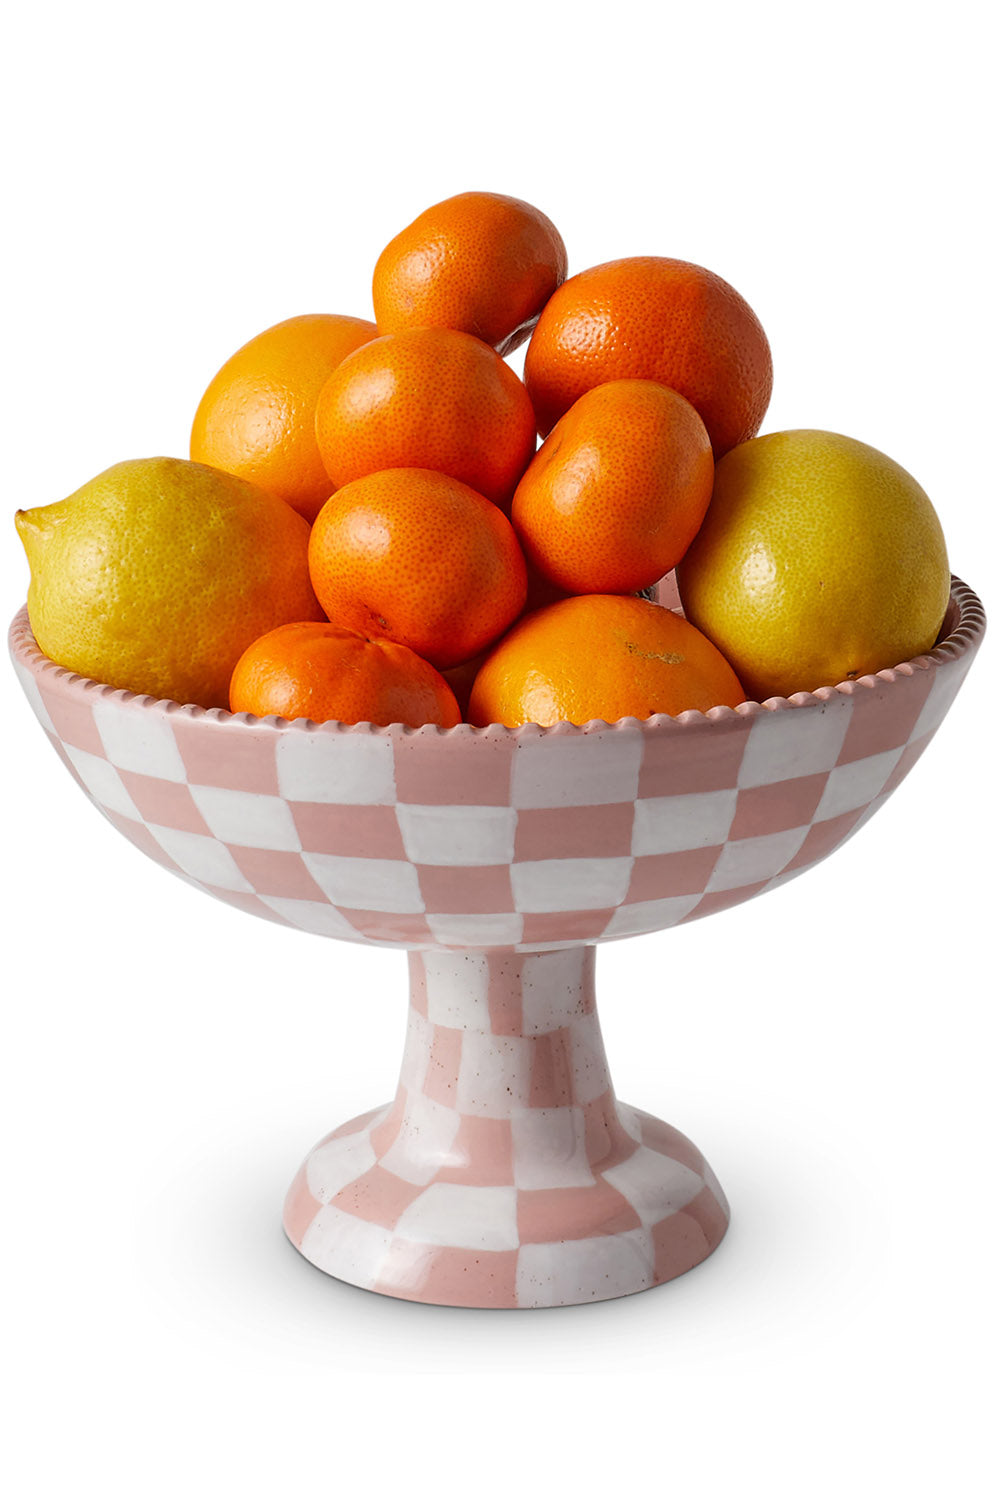 KIP & CO | Checkered Fruit Bowl One Size